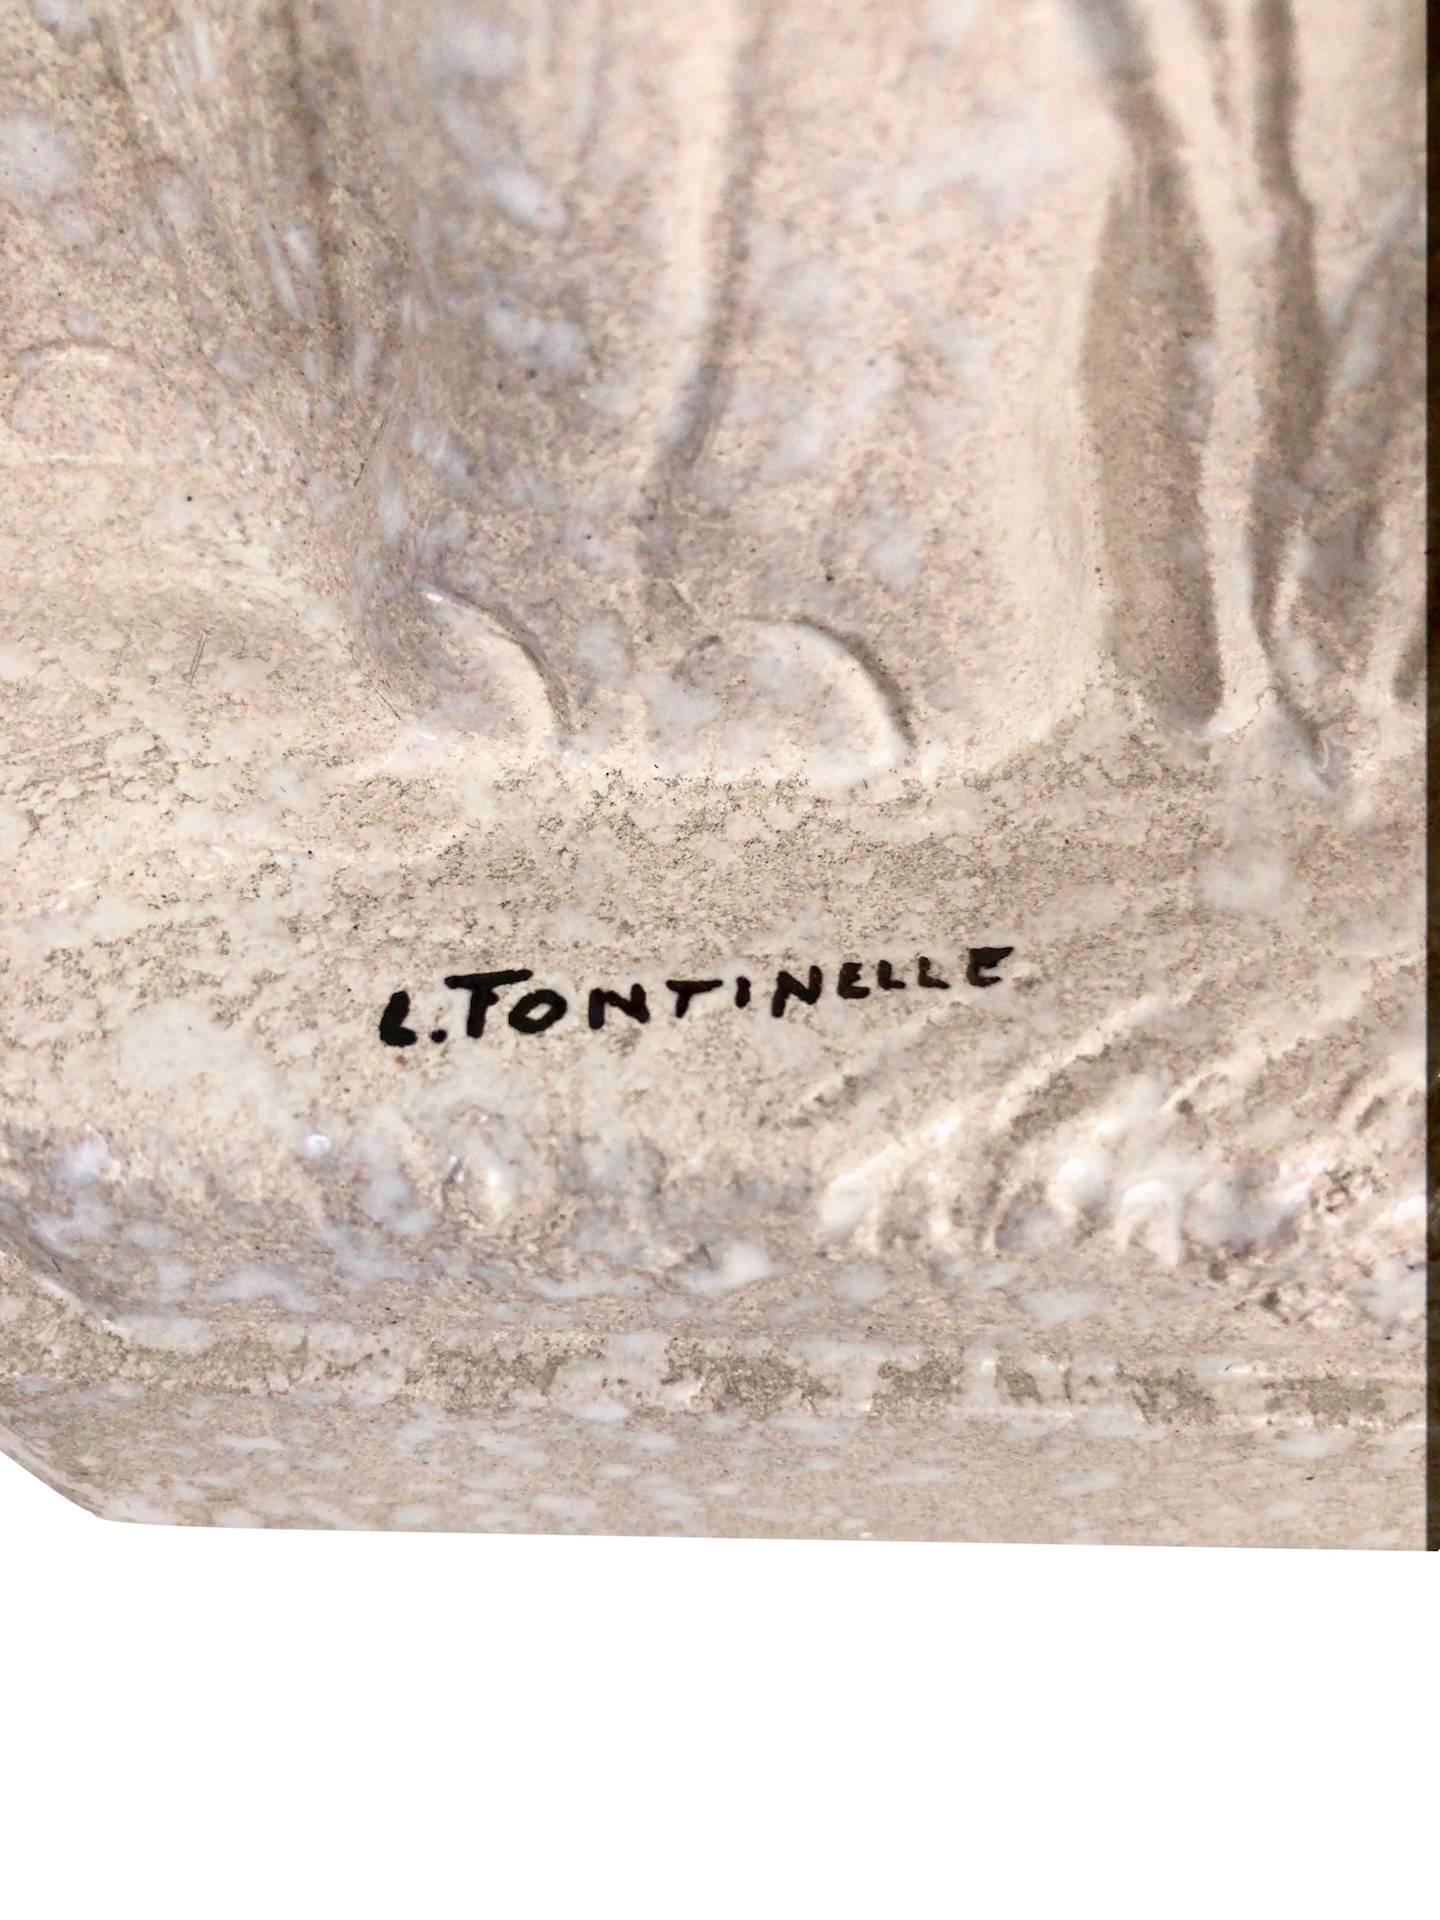 Cream glazed ceramic elephants by Louis Fontinelle (1886-1964).
Signed: L. Fontinelle
France, 1930s.

Dimensions:
Width 51 cm
Height 30 cm
Depth 8 cm.
 